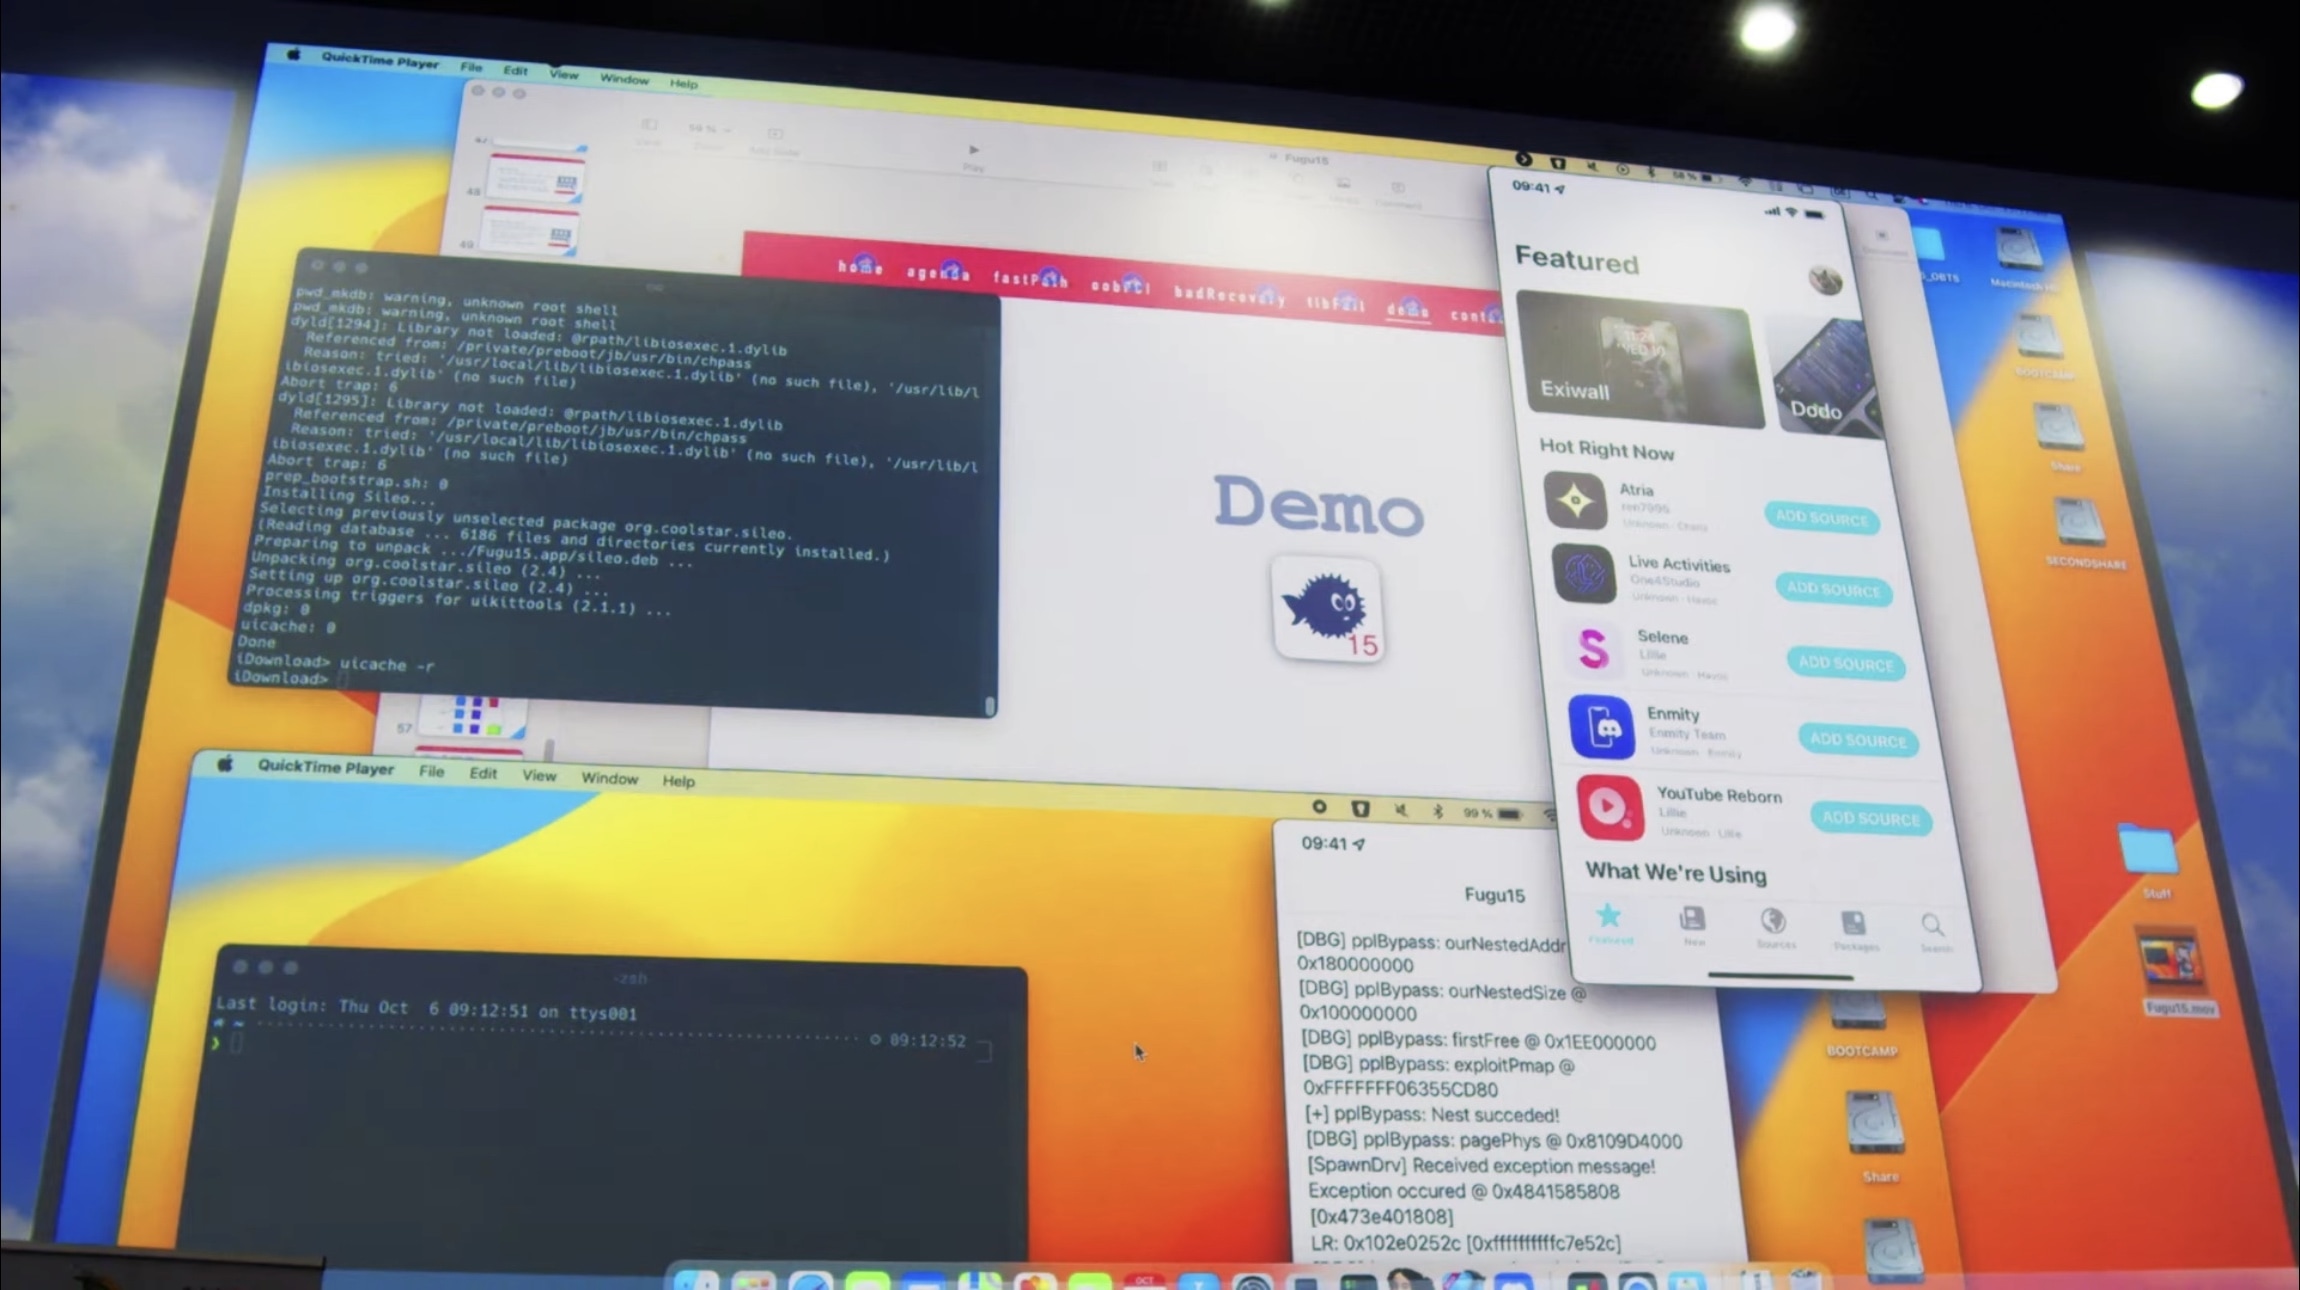 Linus Henze demonstrates Fugu15 jailbreak on iOS 15.4.1.